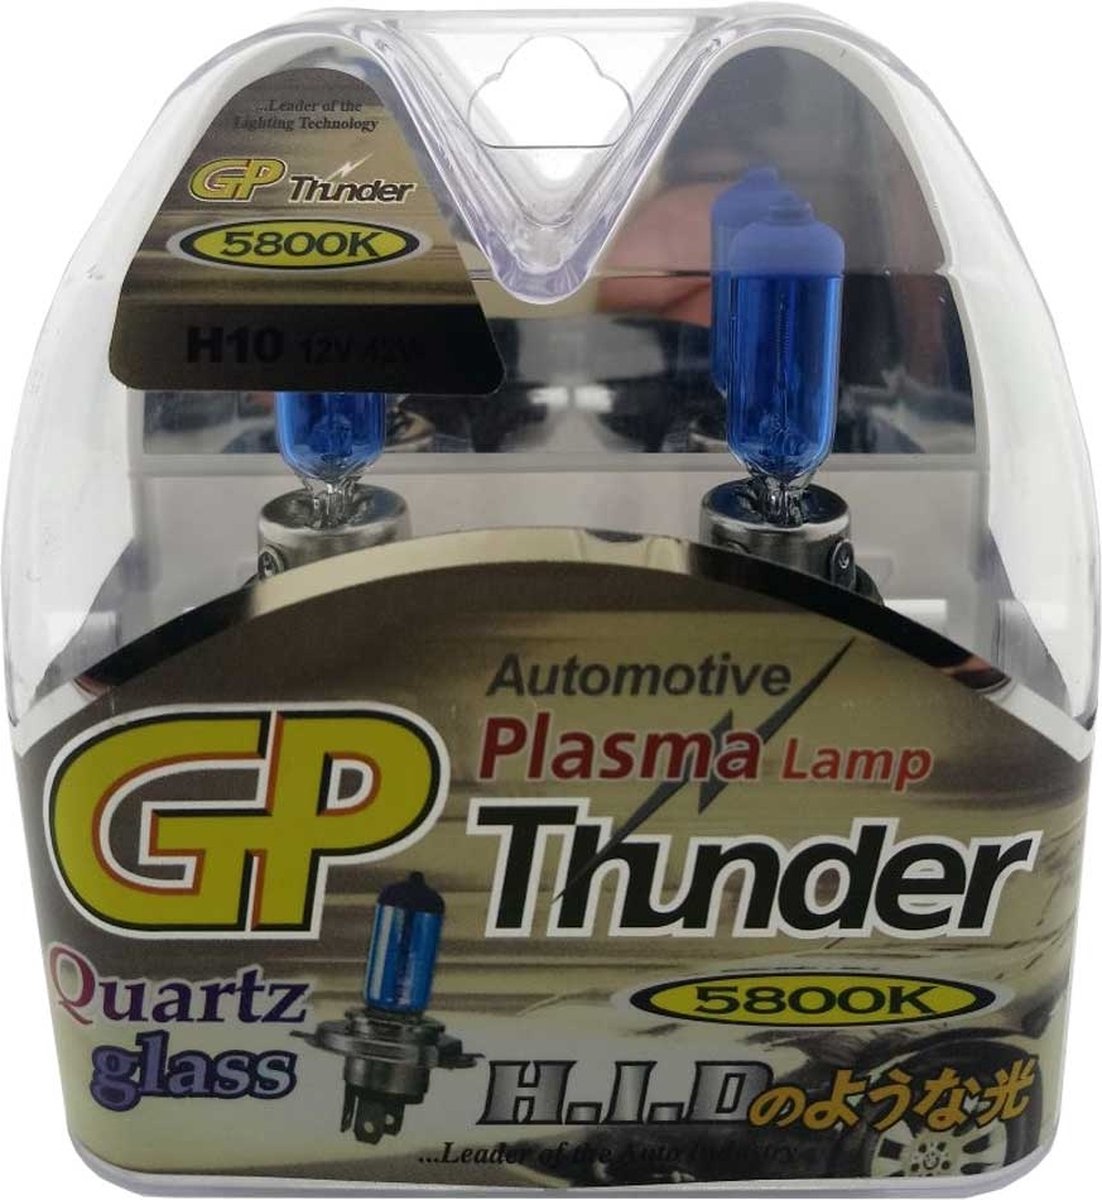 GP Thunder 5800k H10 42w Bright White Xenon Look